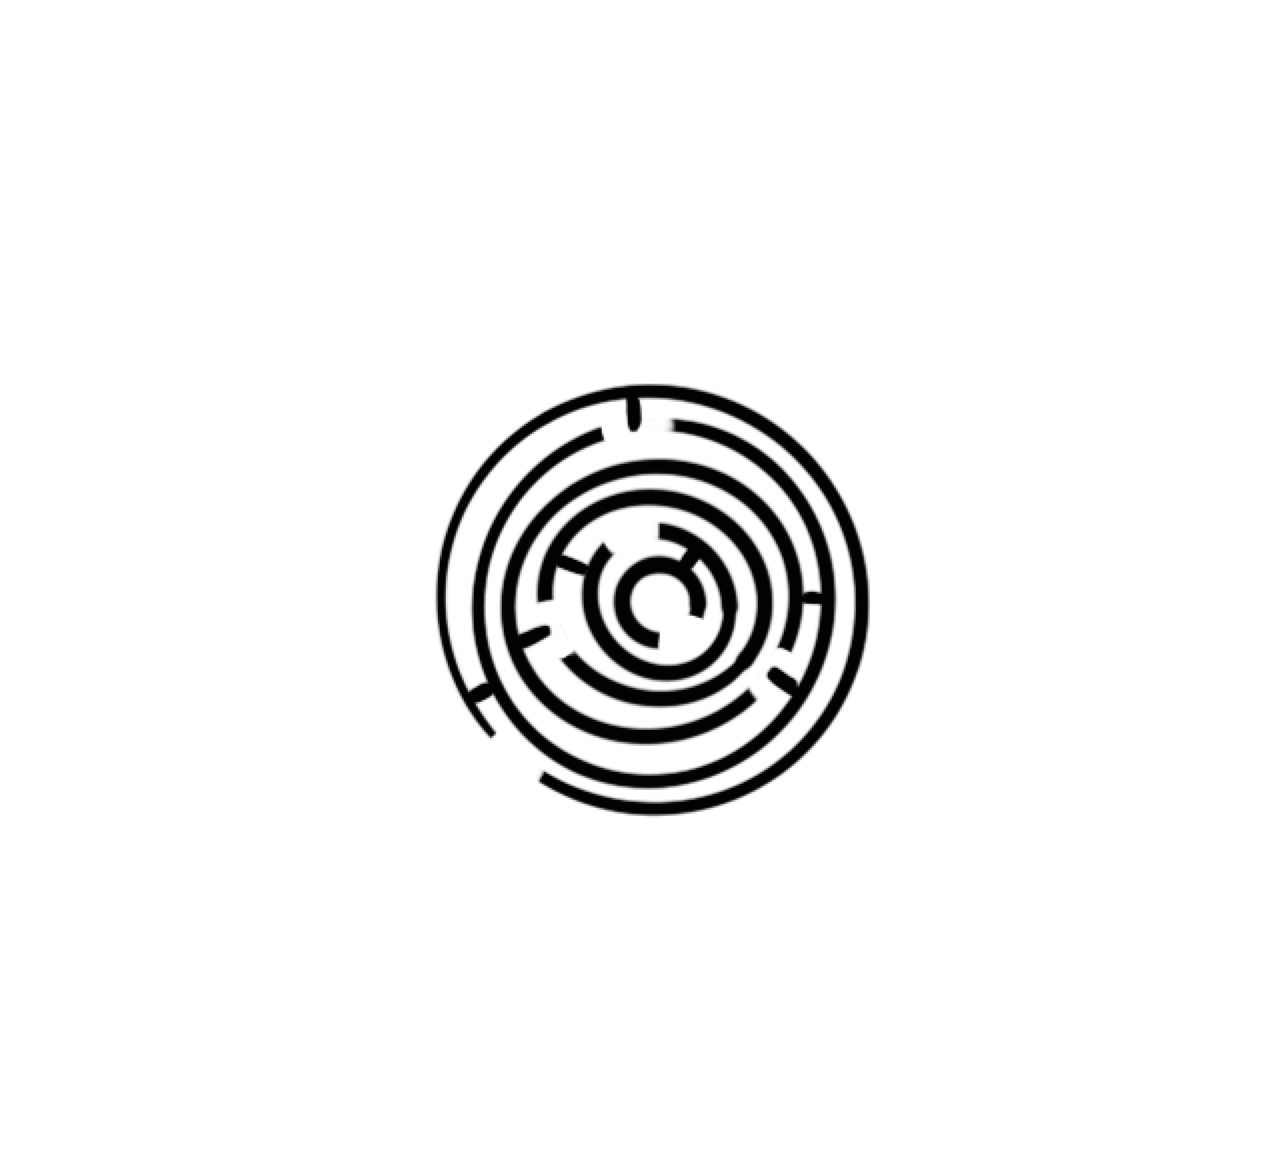 Classic theme spiral icon